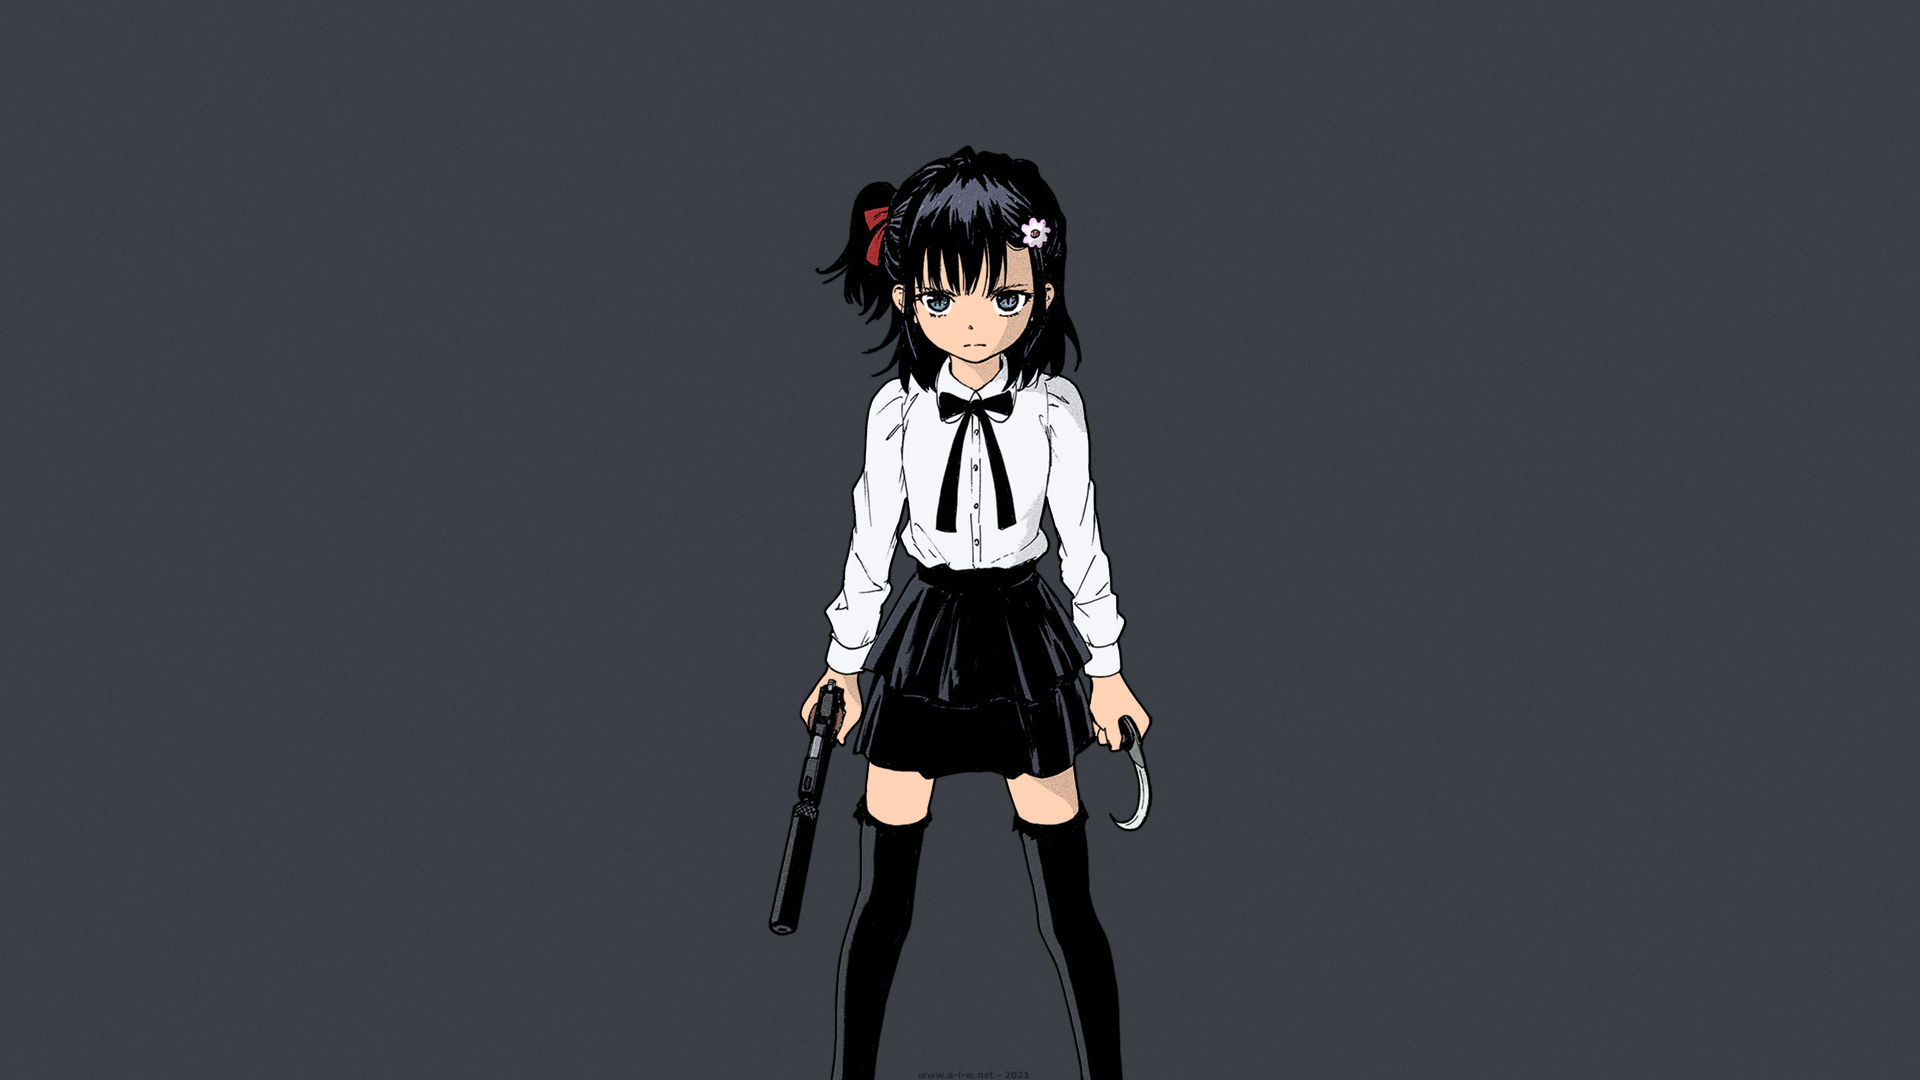 Candy Cigarettes Inoue Tomonori Miharu Suzukaze Black Hair Short Skirt Gun Knife Angry Short Hair Gr 1920x1080